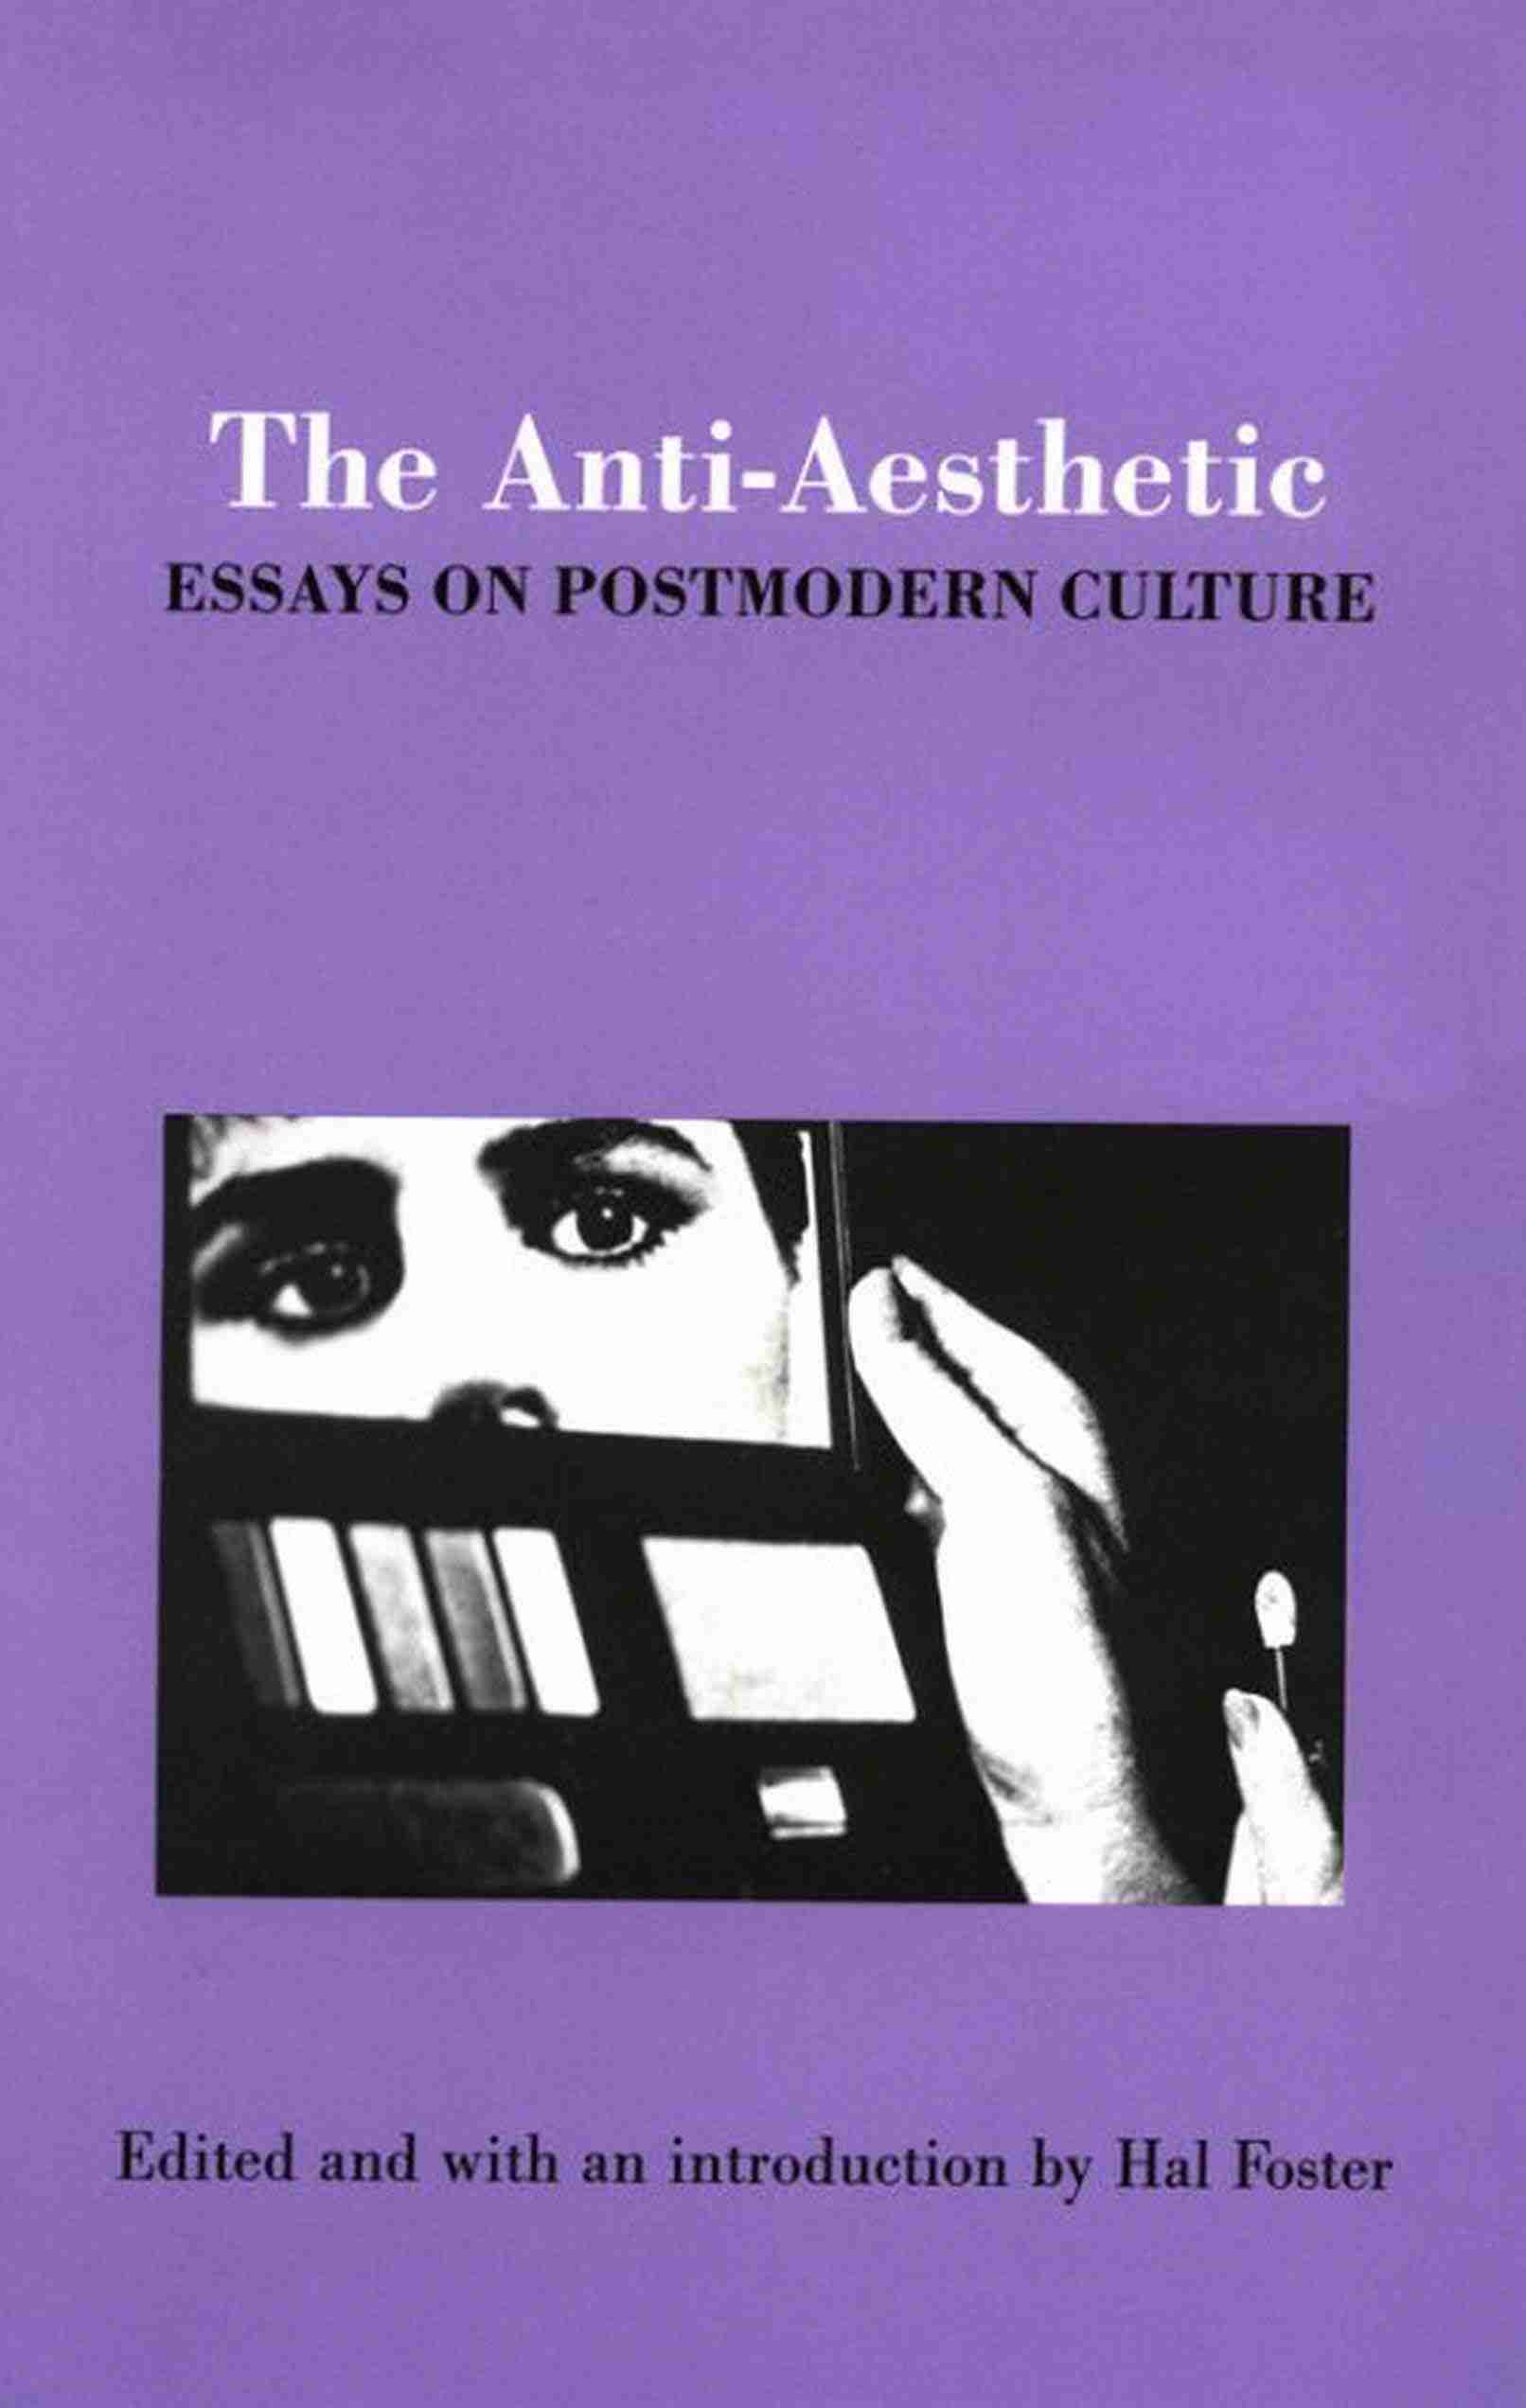 The Anti-Aesthetic - Essays on Postmodern Culture